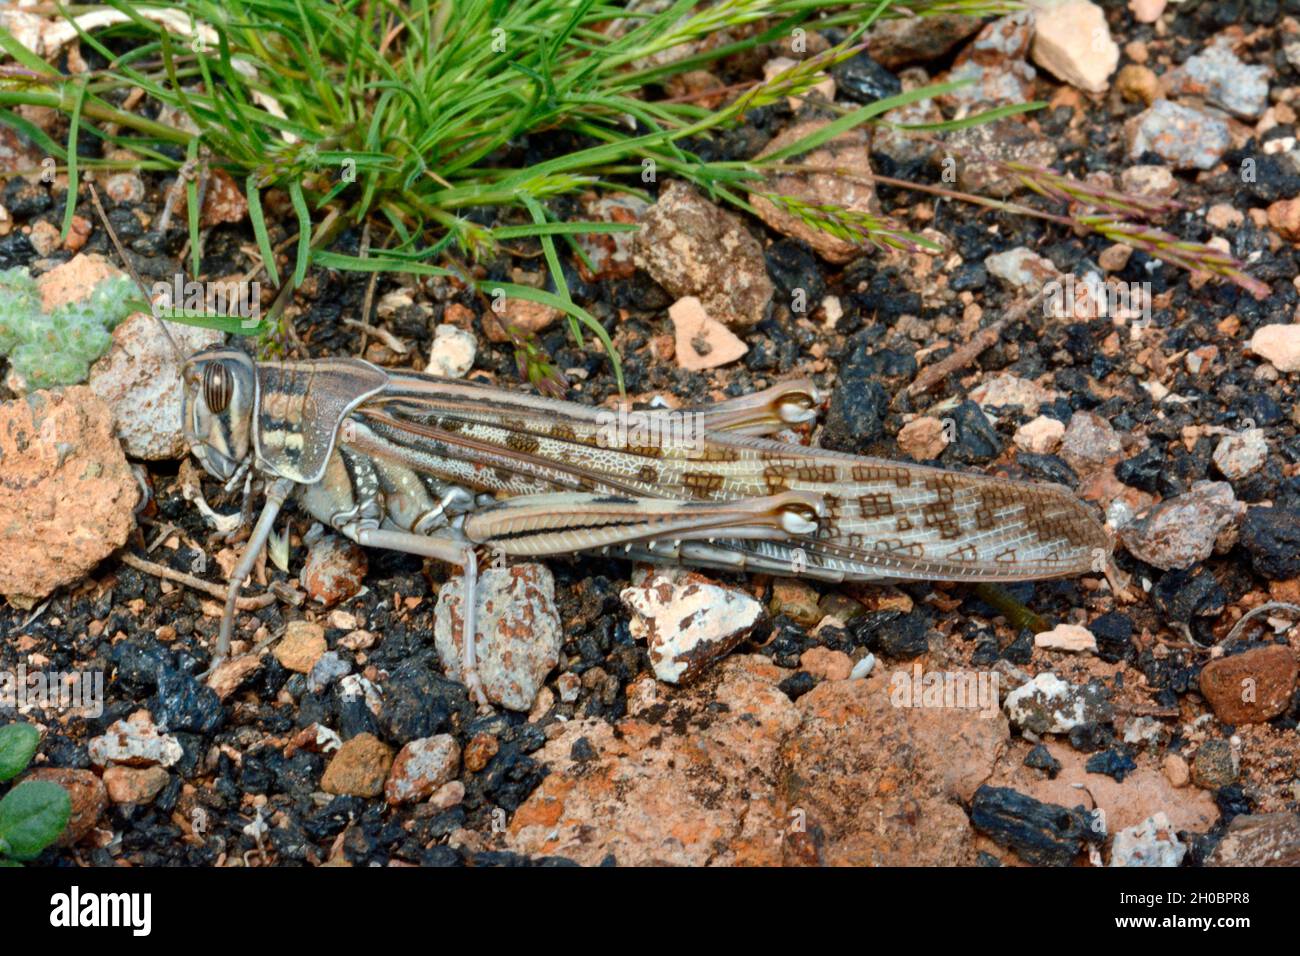 African locust (Locusta migratoria) on ground, Lanzarote, Canary Islands Stock Photo